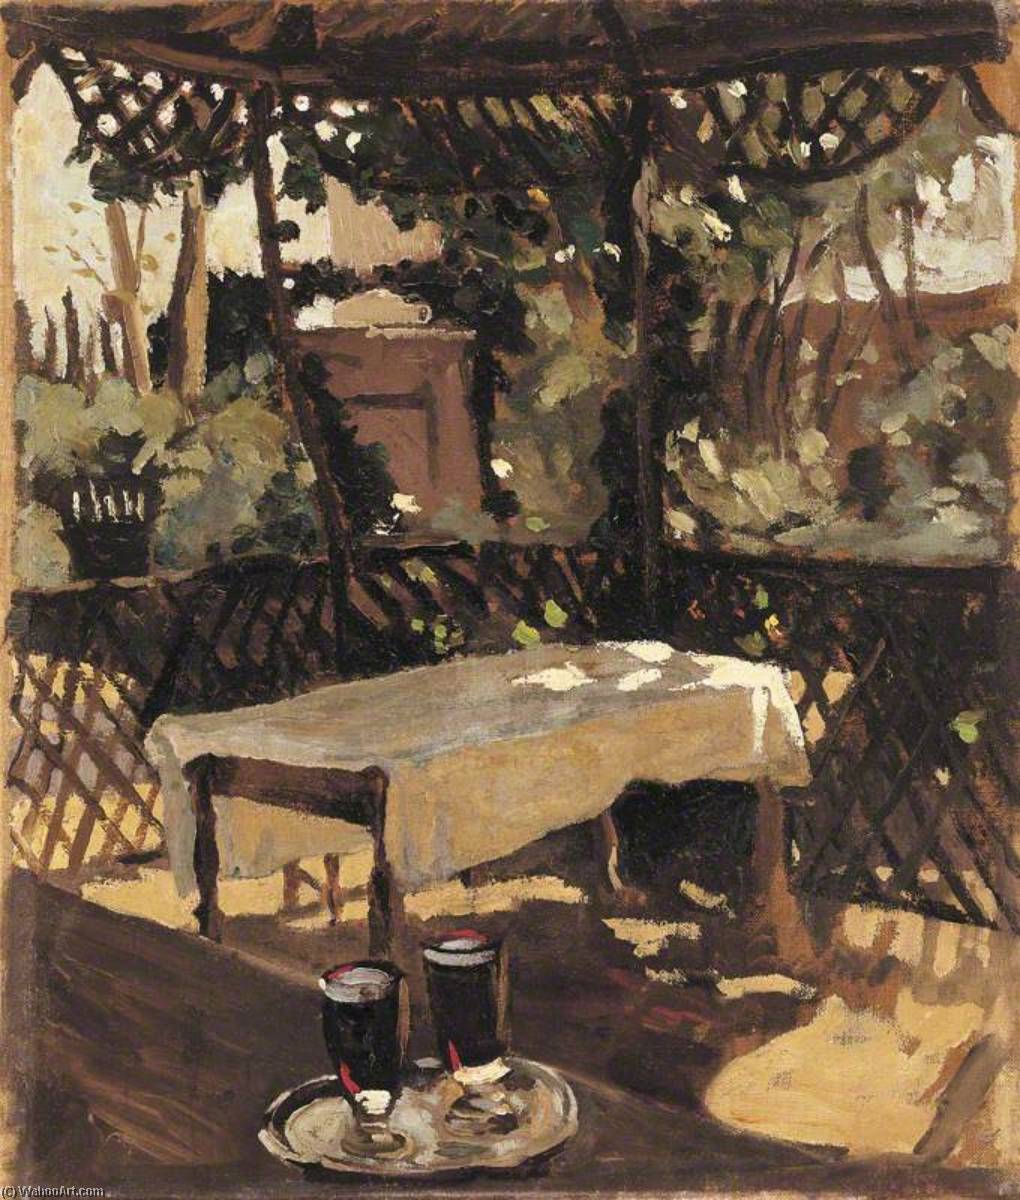 Order Artwork Replica Two Glasses on a Tray on a Verandah (after John Singer Sargent), 1930 by Winston Spencer Churchill (Inspired By) (1874-1965) | ArtsDot.com